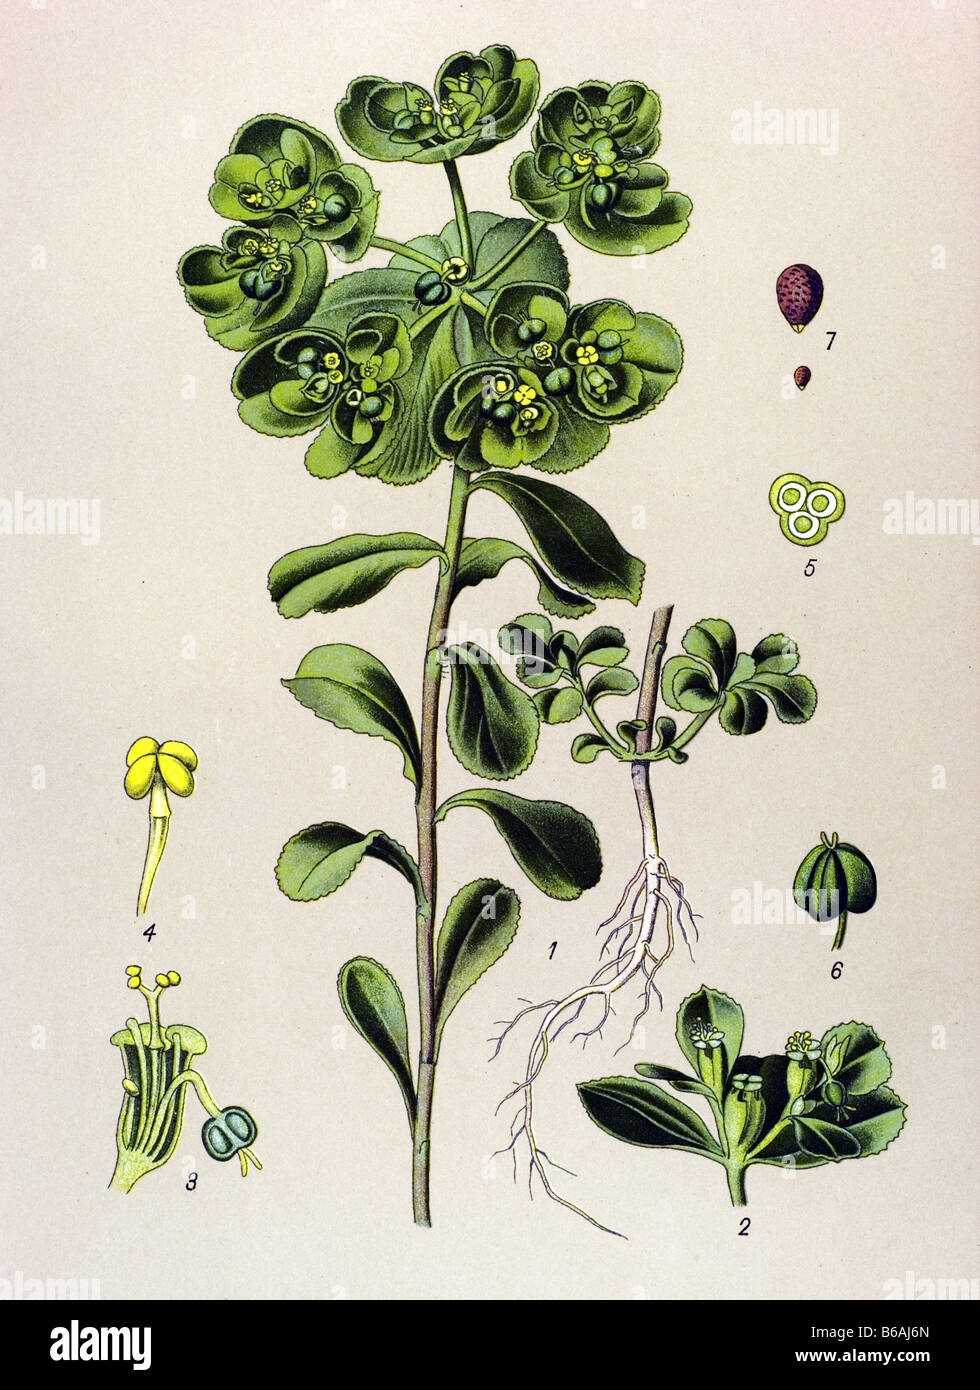 Sun Spurge, Euphorbia helioscopia, poisonous plants illustrations Stock Photo